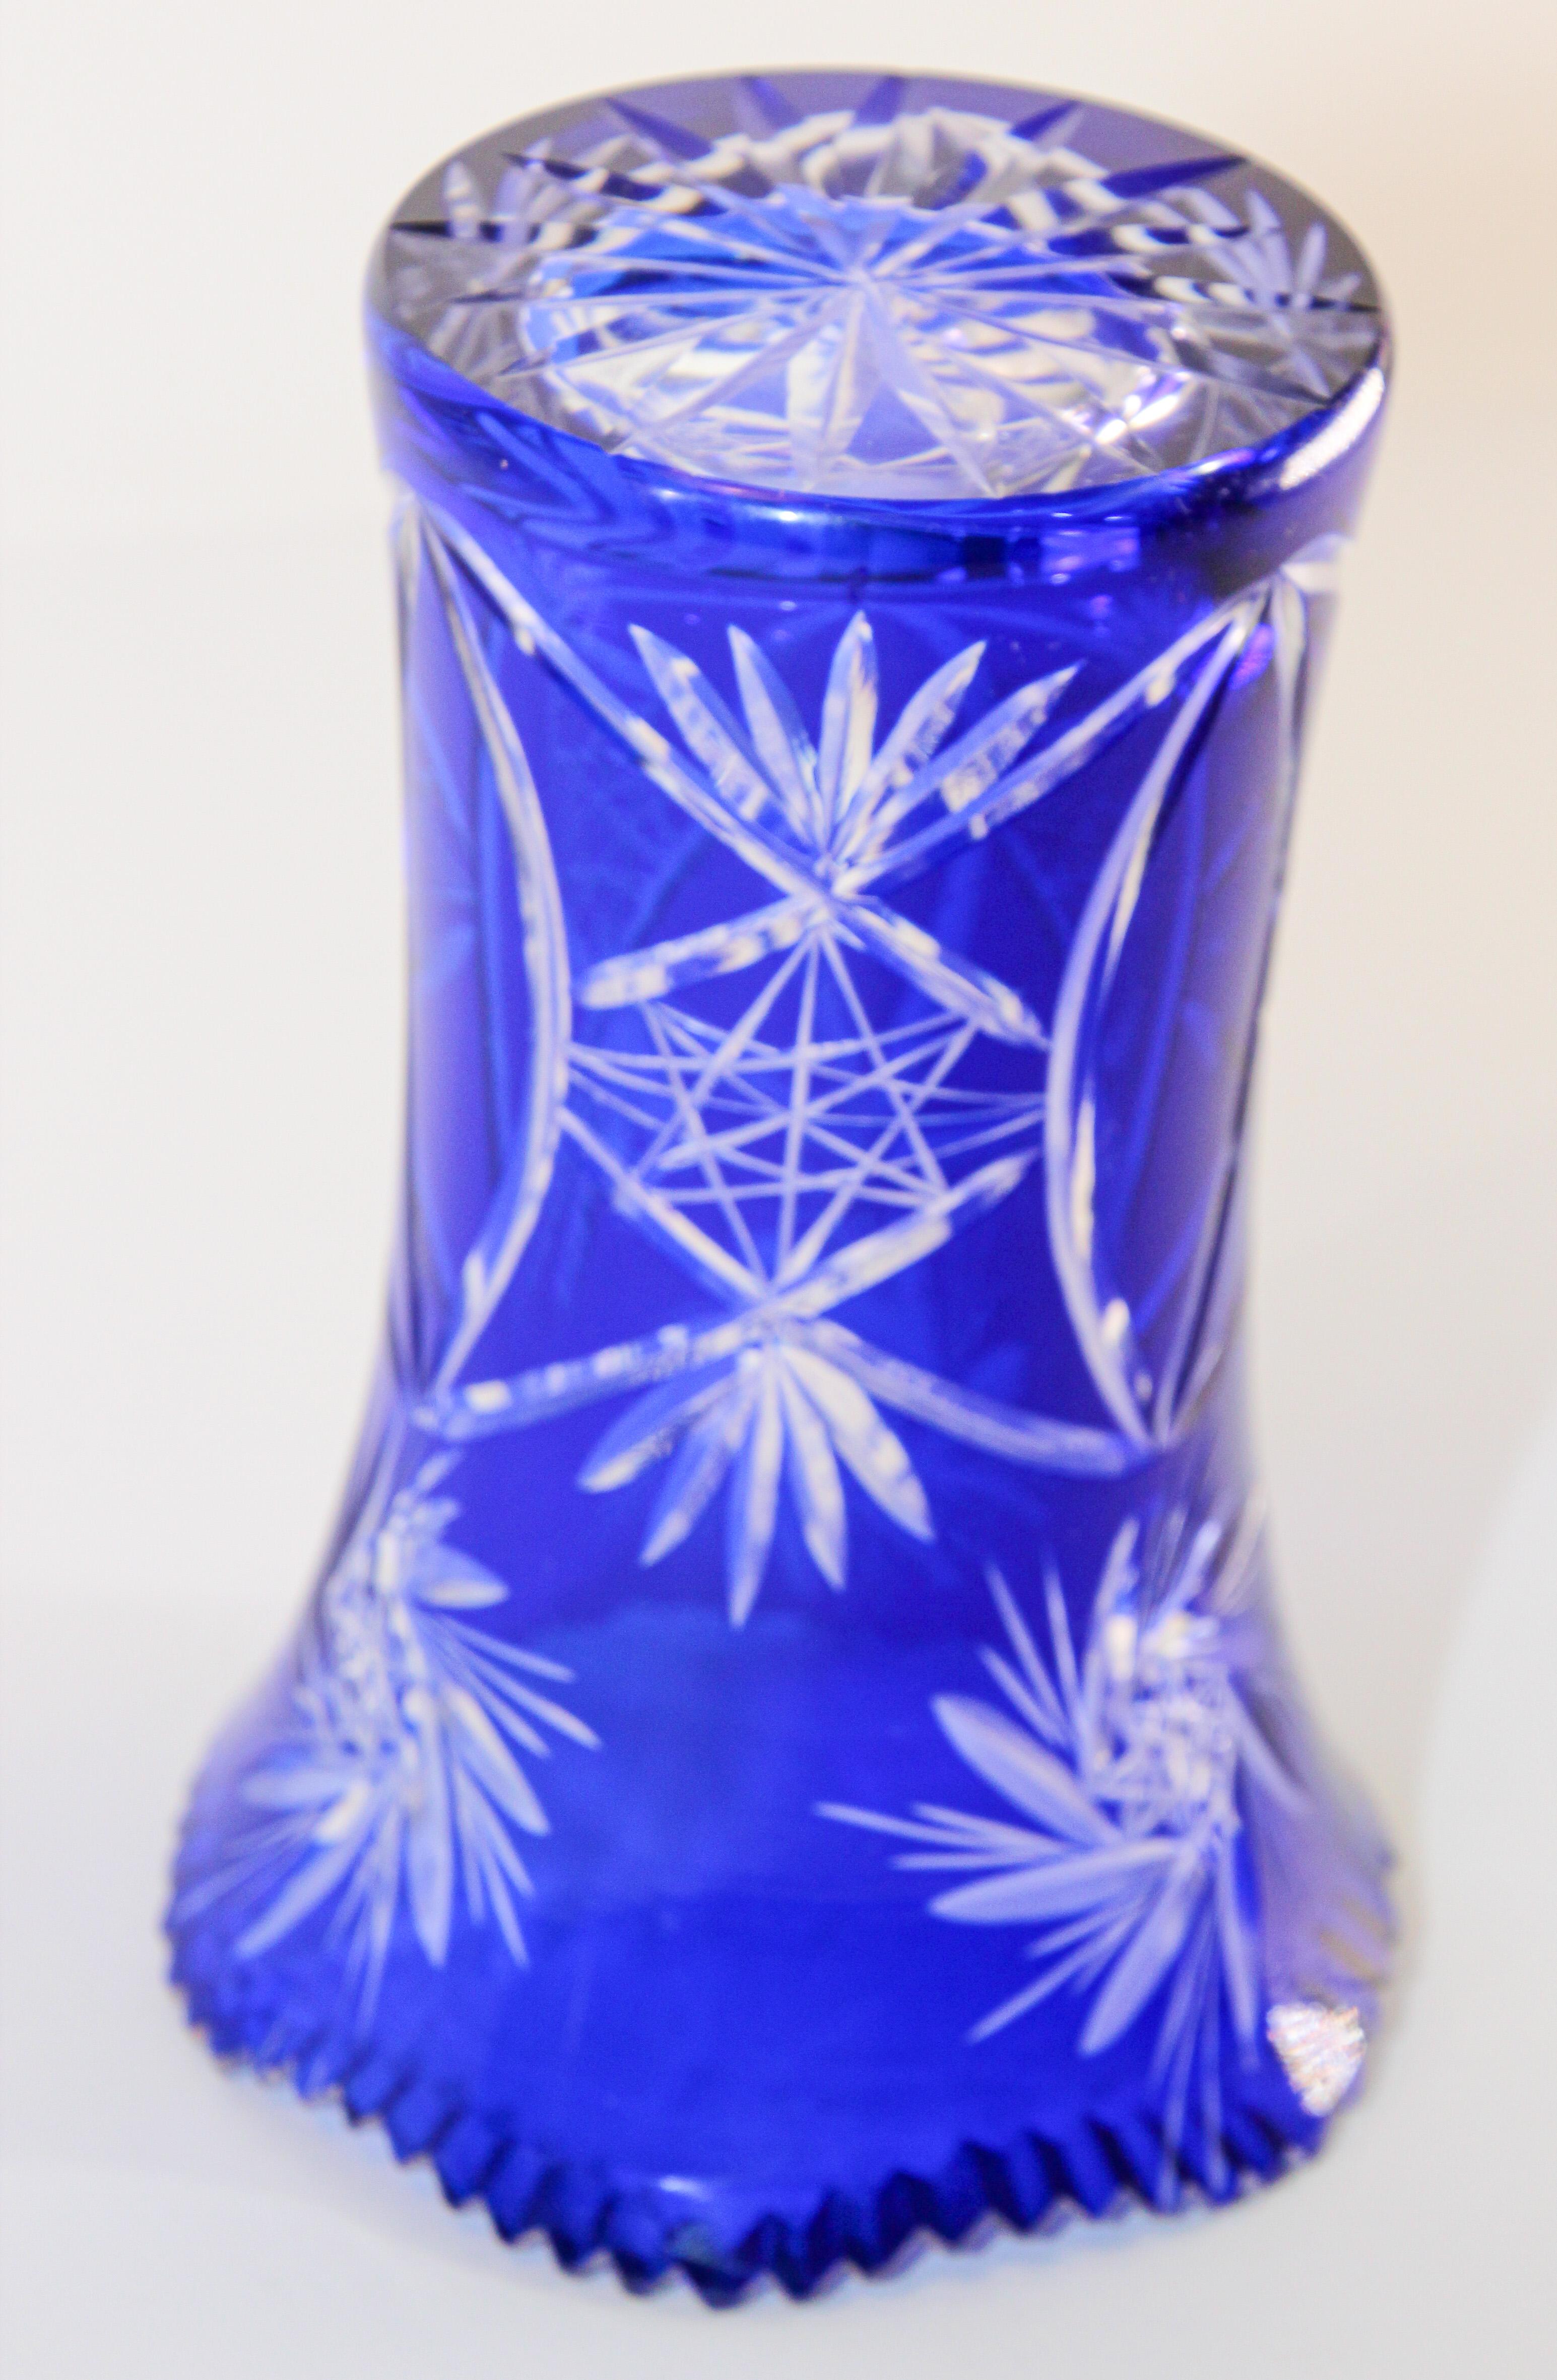 Vintage Bohemian Cobalt Blue Cut to Clear Glass Crystal Vase 8